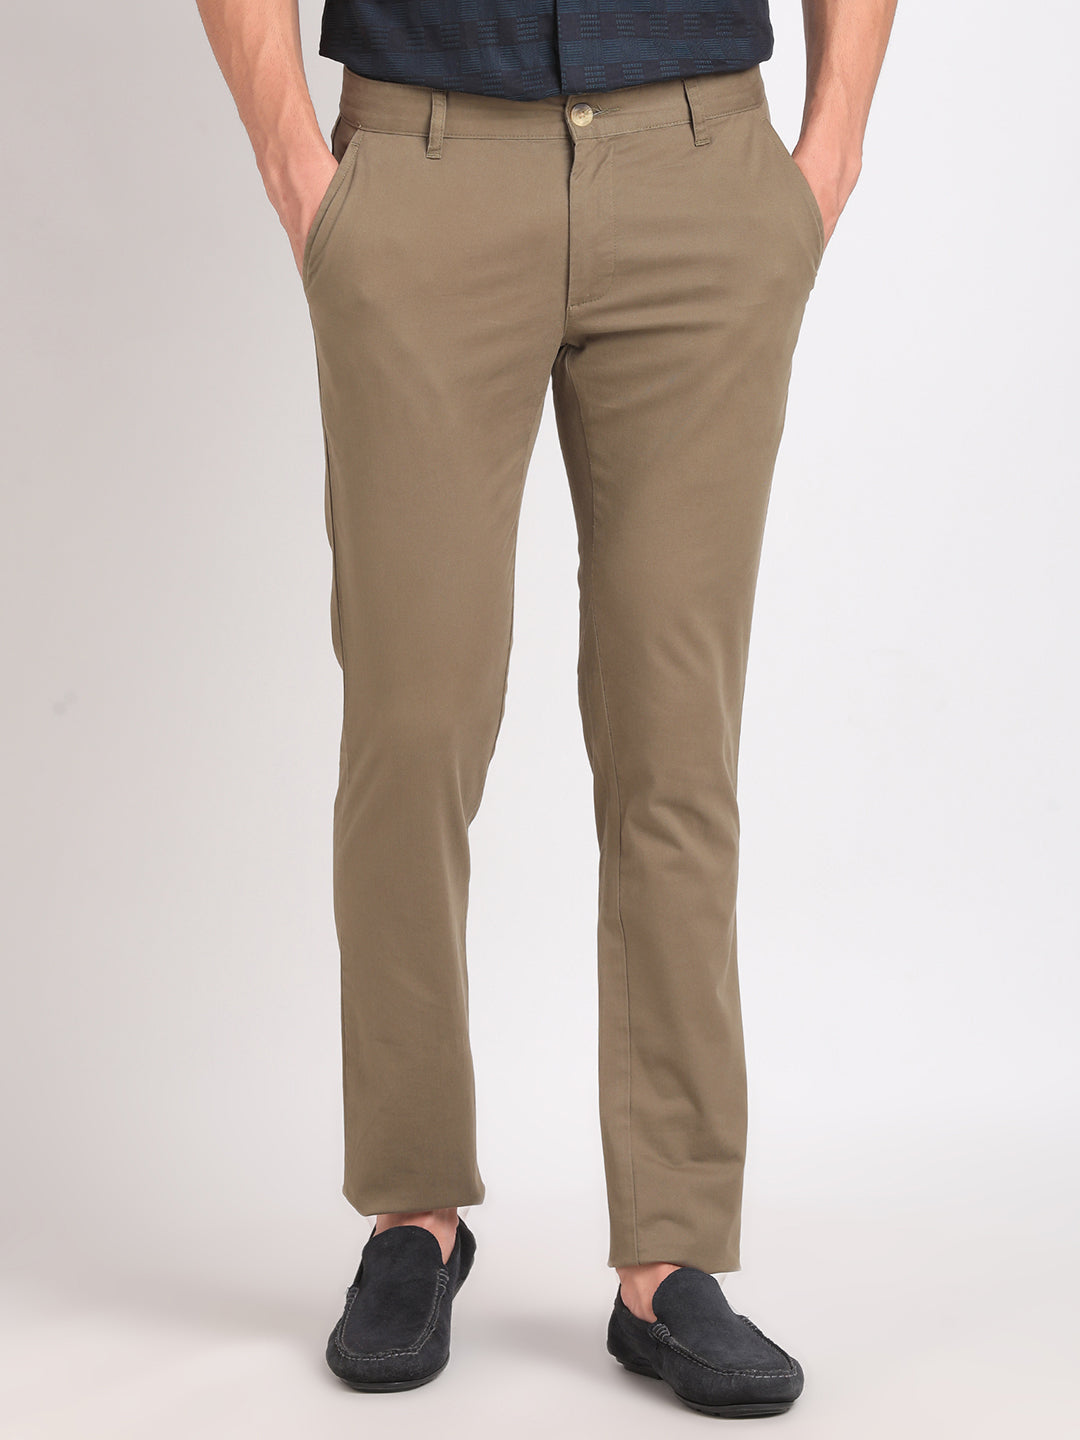 CEO Chino Classic Pocket Cotton Stretch Pants Khaki  Collars  Co